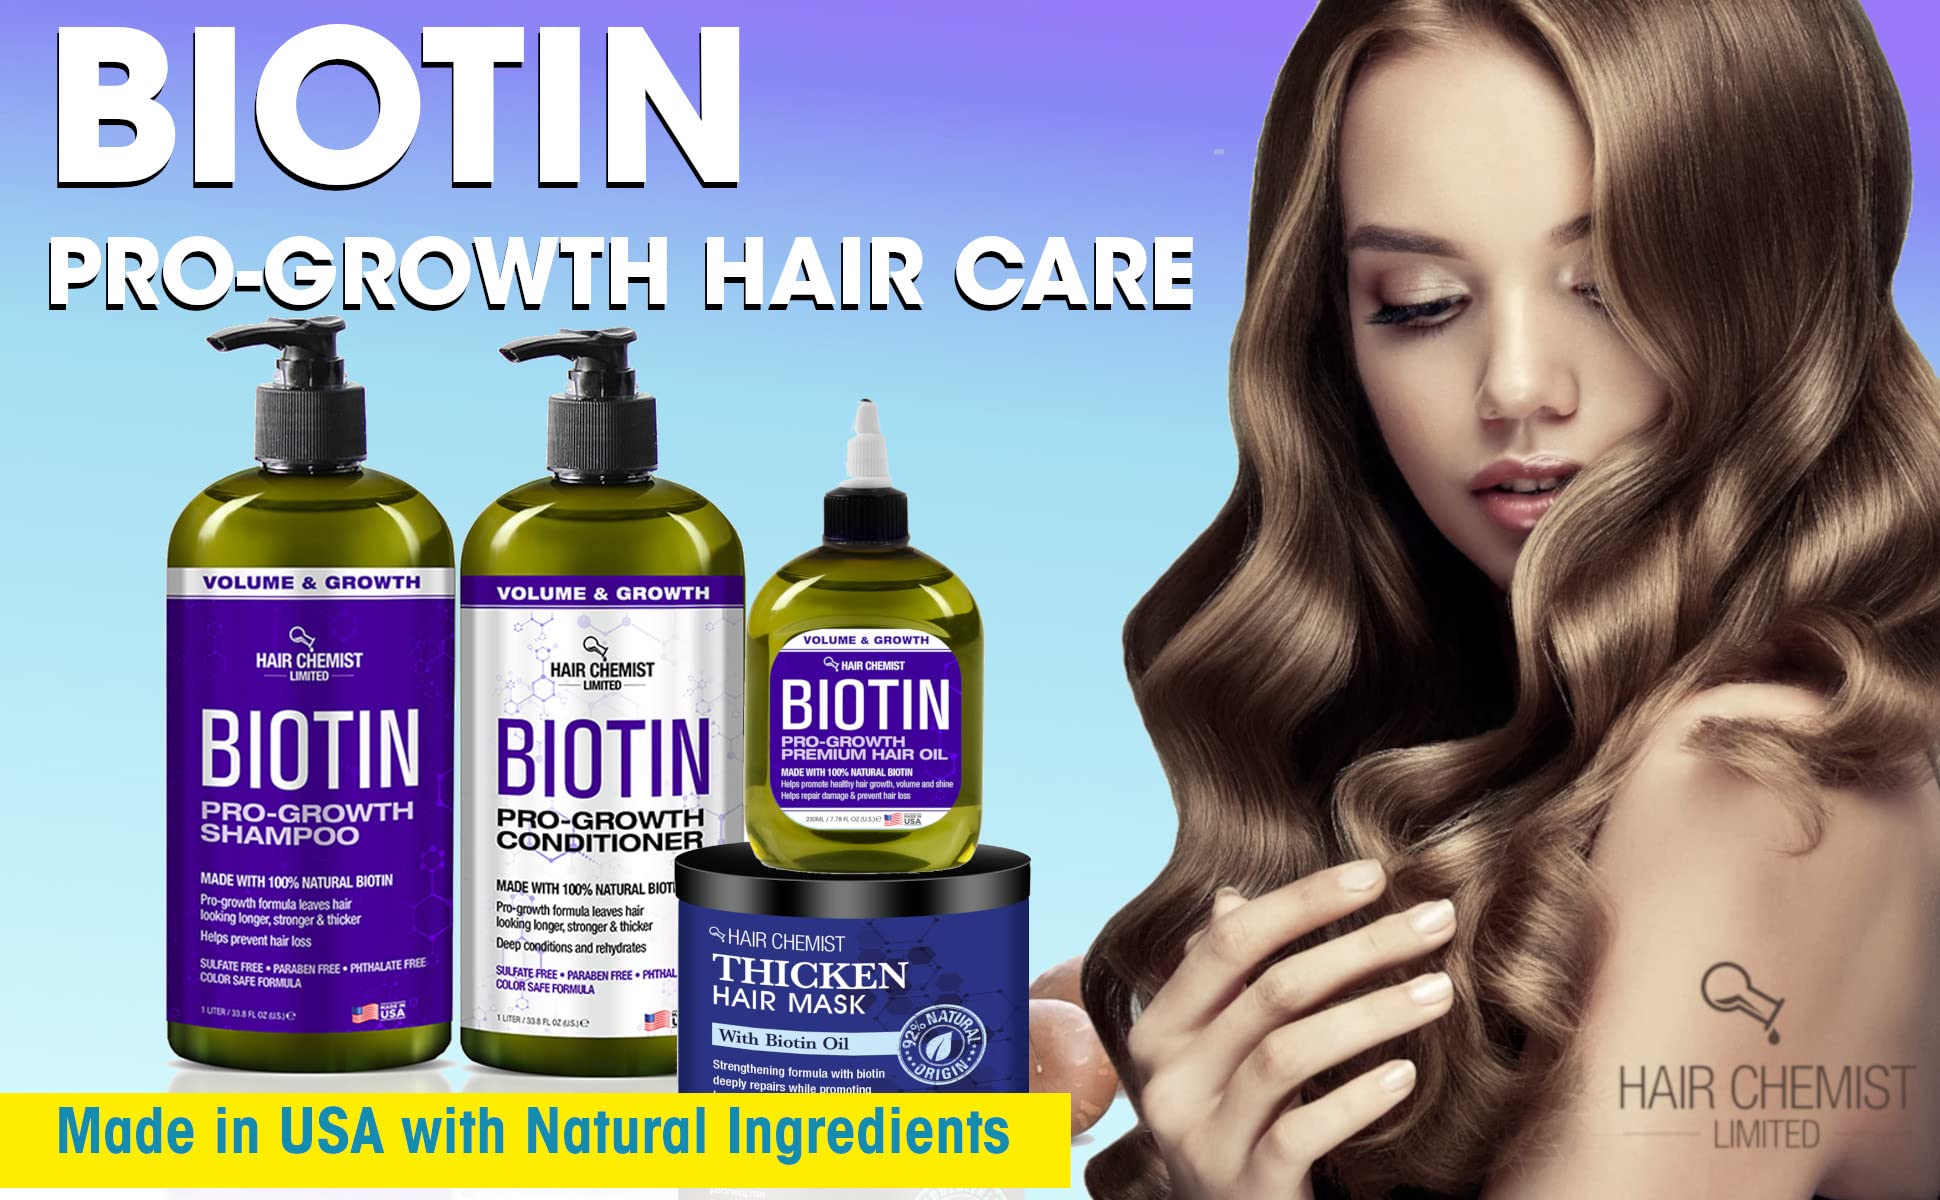 Hair Chemist Biotin Pro-Growth Shampoo & Conditioner 2-PC Gift Set - Includes 33.8oz Shampoo & 33.8oz Conditioner